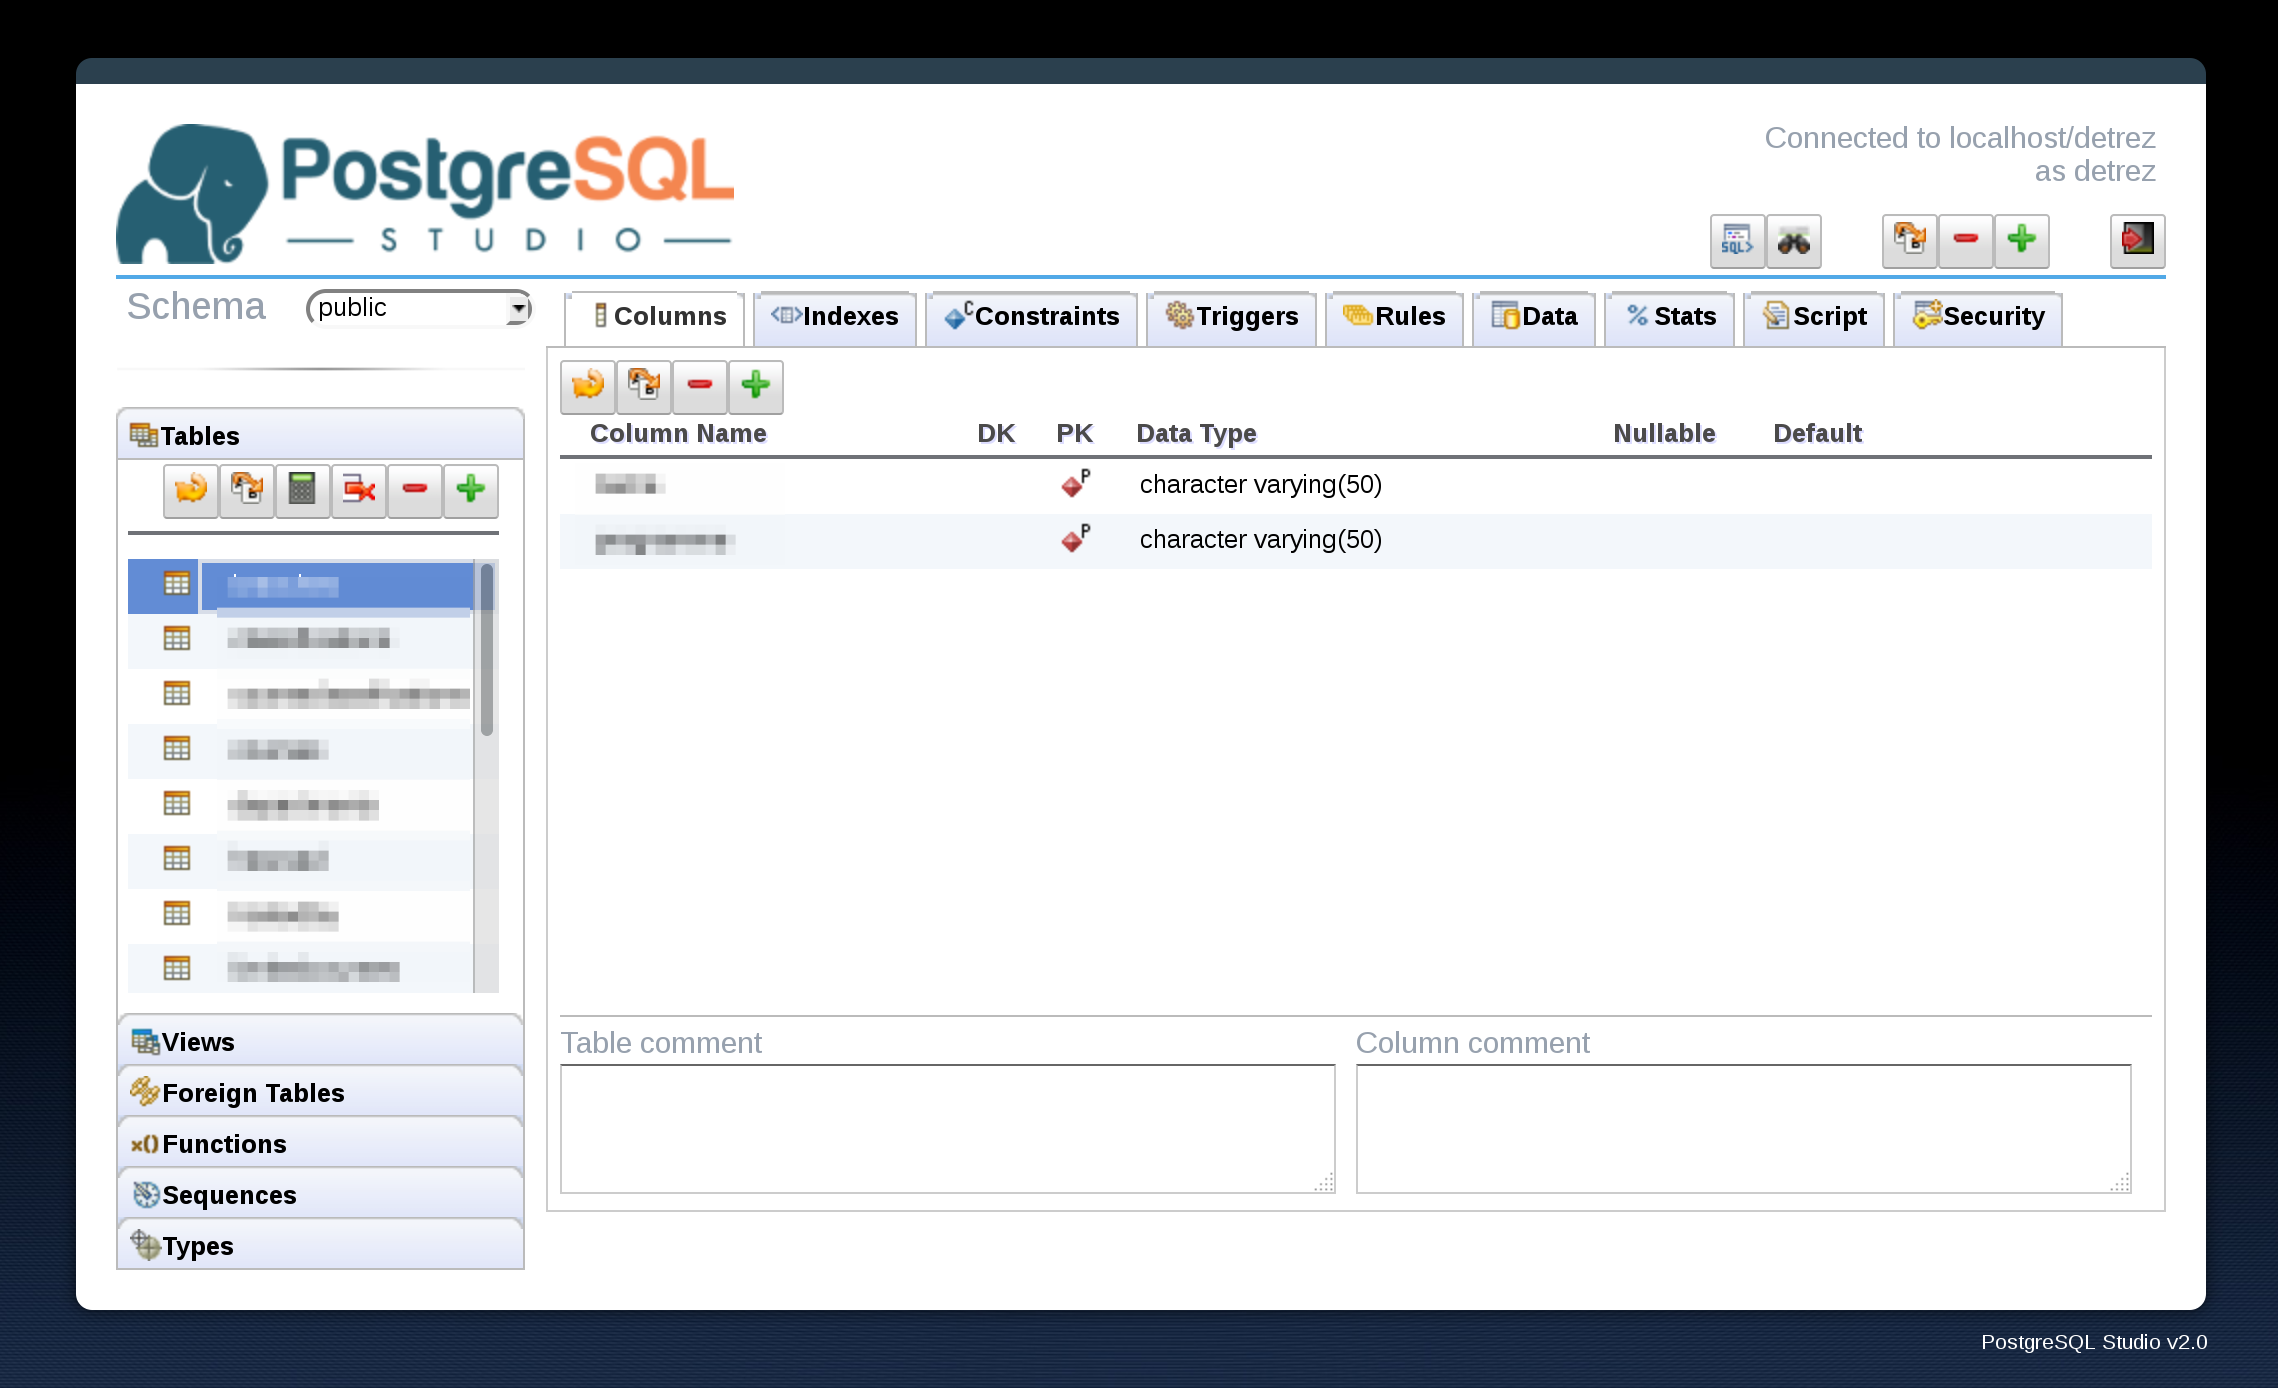 PostgreSQL Studio main interface